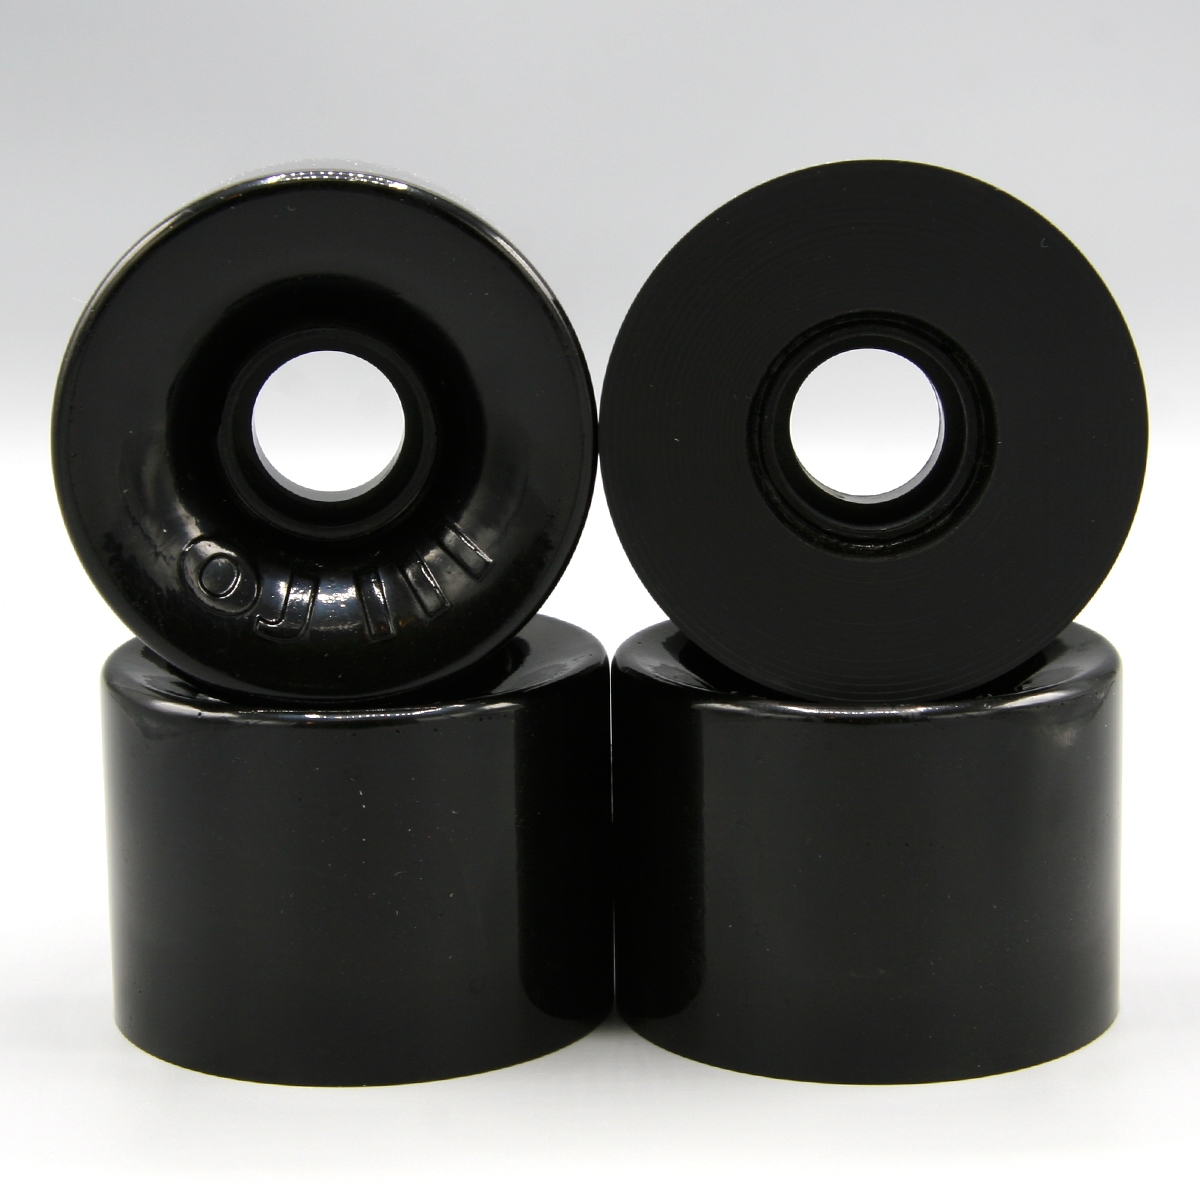 OJ Hot Juice (black) 60mm/78a